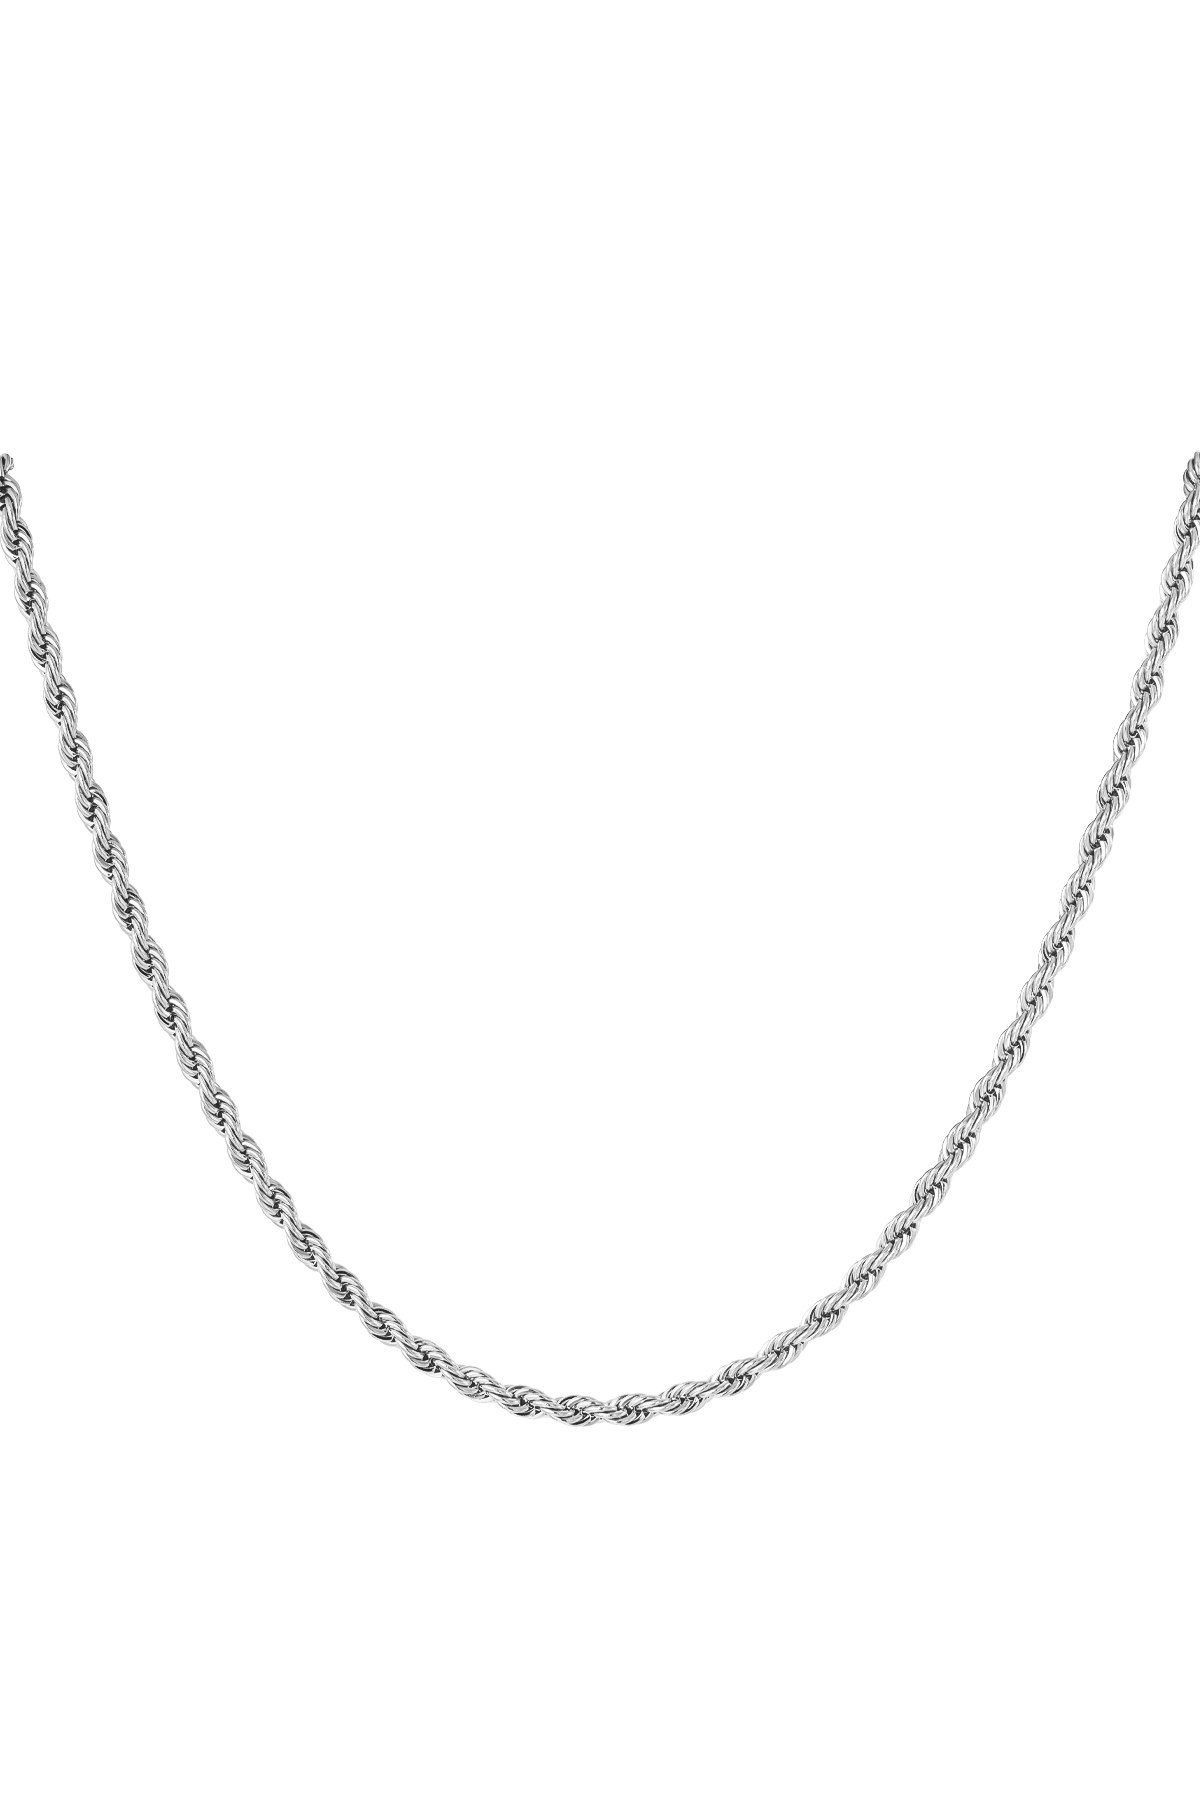 Gedrehte Unisex-Kette lang 60 cm – Silber – 4,0 mm